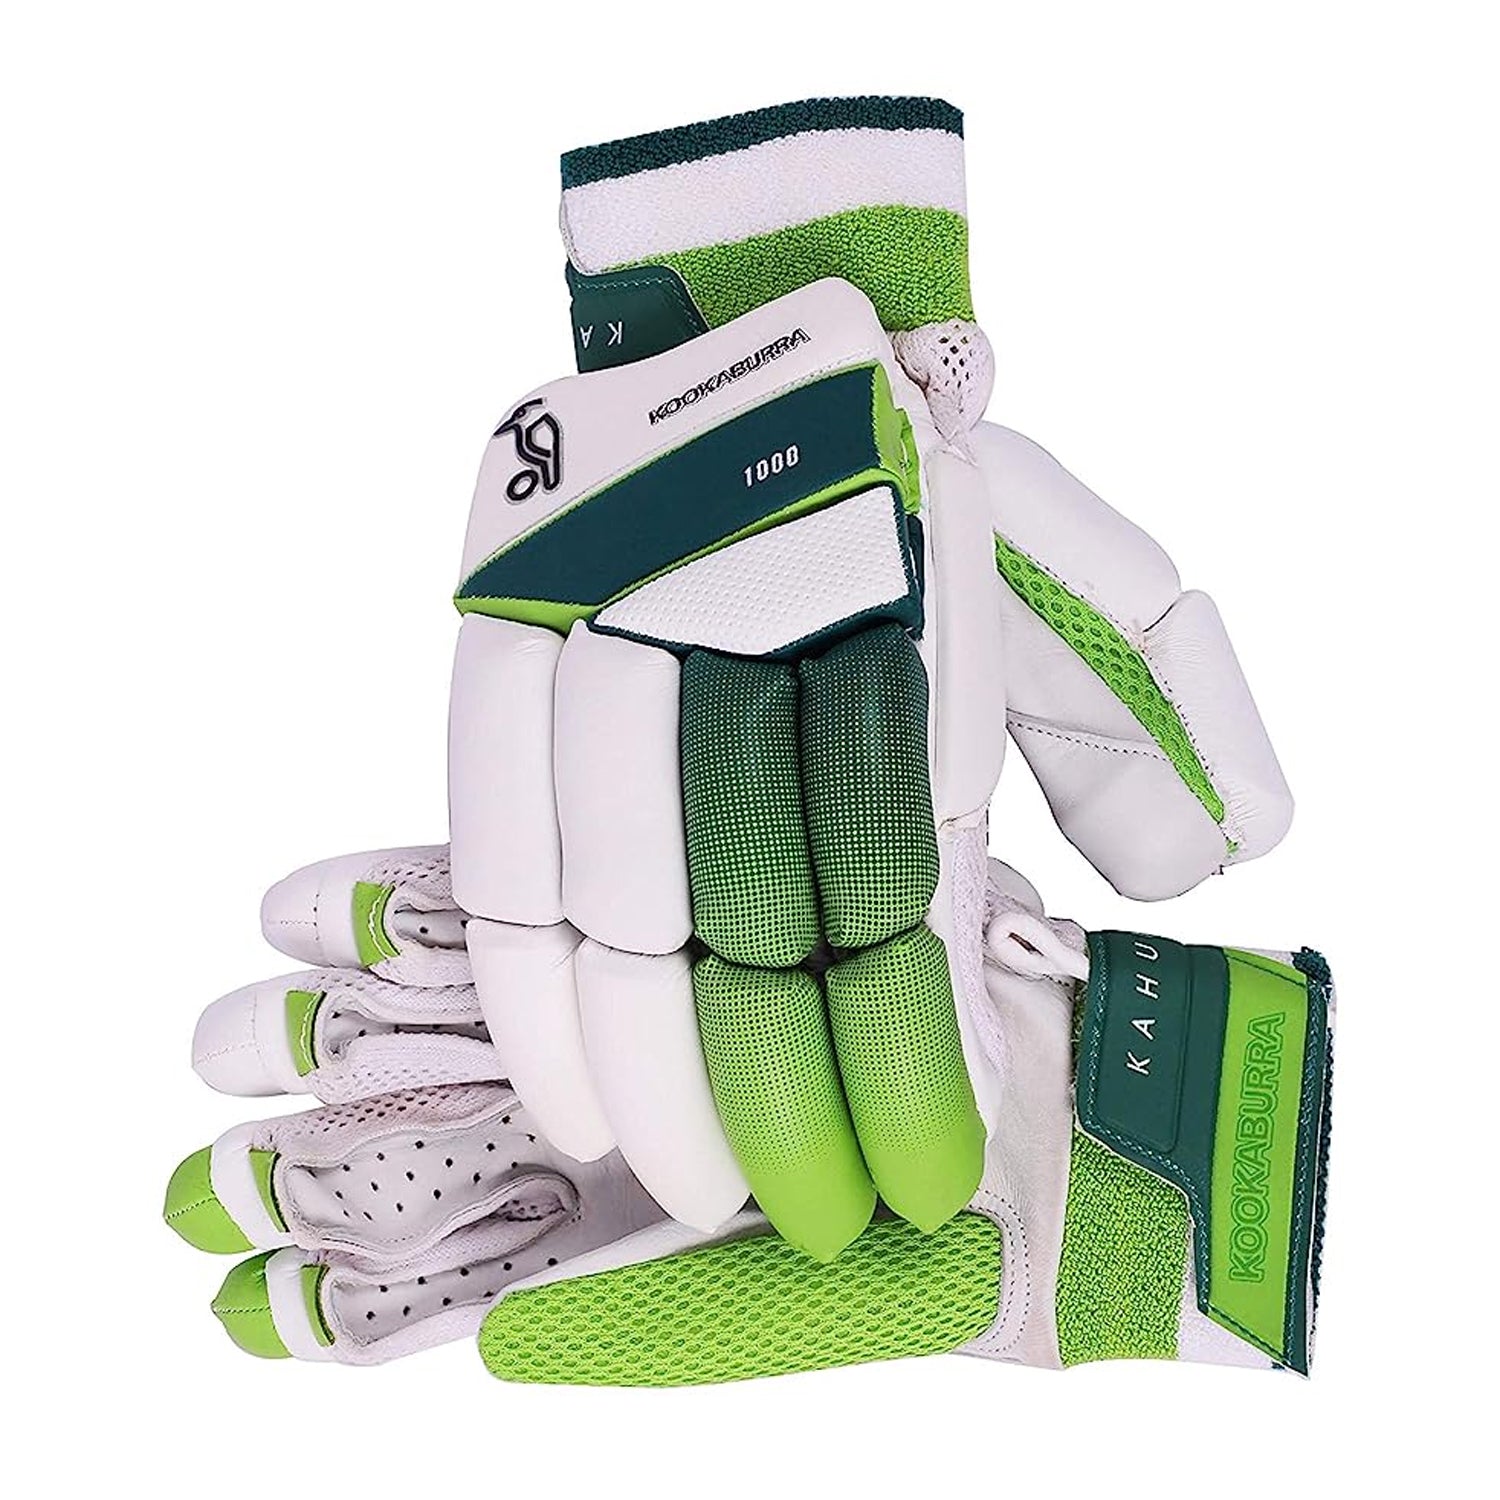 Kookaburra Kahuna 1000 RH Batting Gloves - Best Price online Prokicksports.com